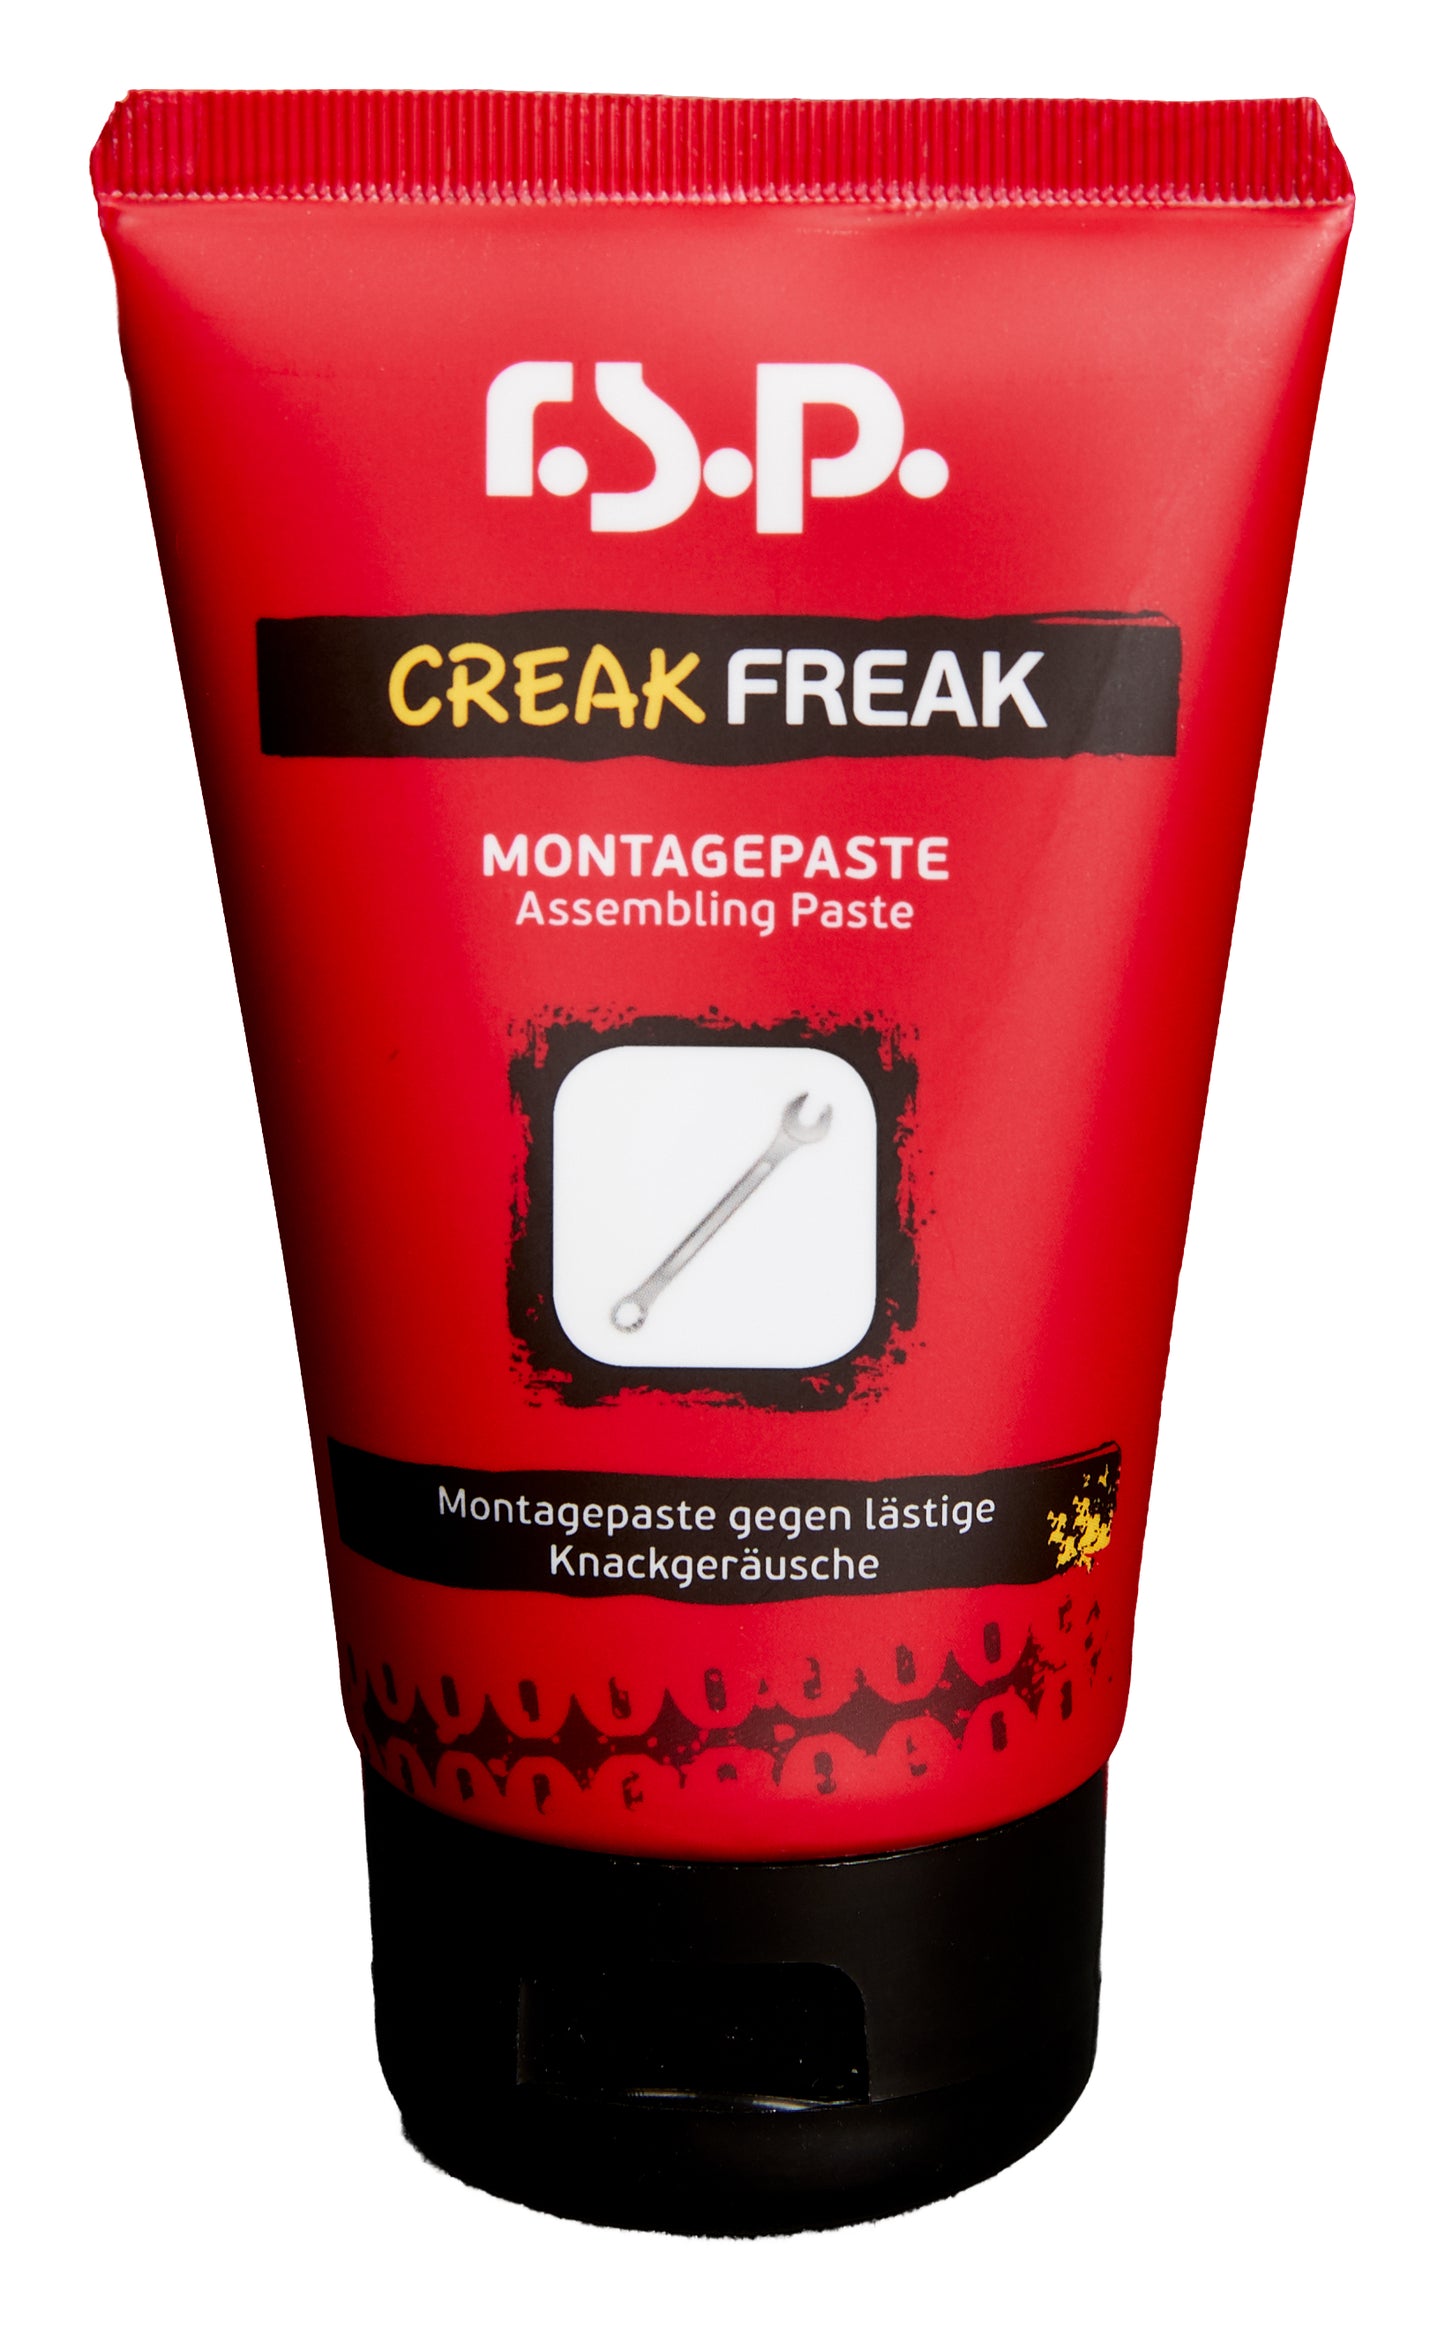 r.s.p. Creak Freak (Montagepaste) 50g